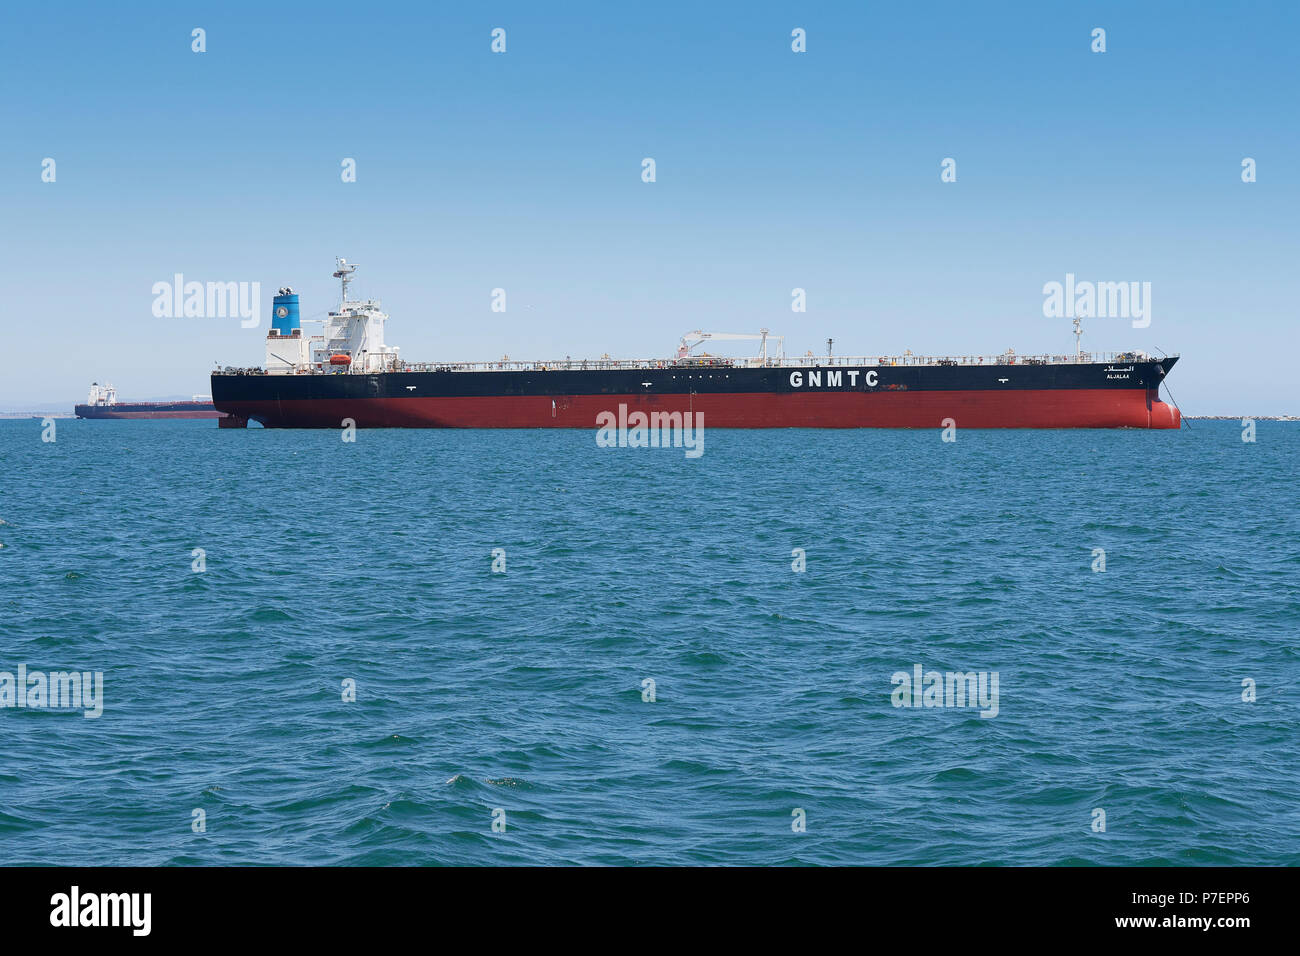 Giant Supertanker, GNMTC ALJALAA, Anchored In The Port Of Long Beach, California, USA. Stock Photo